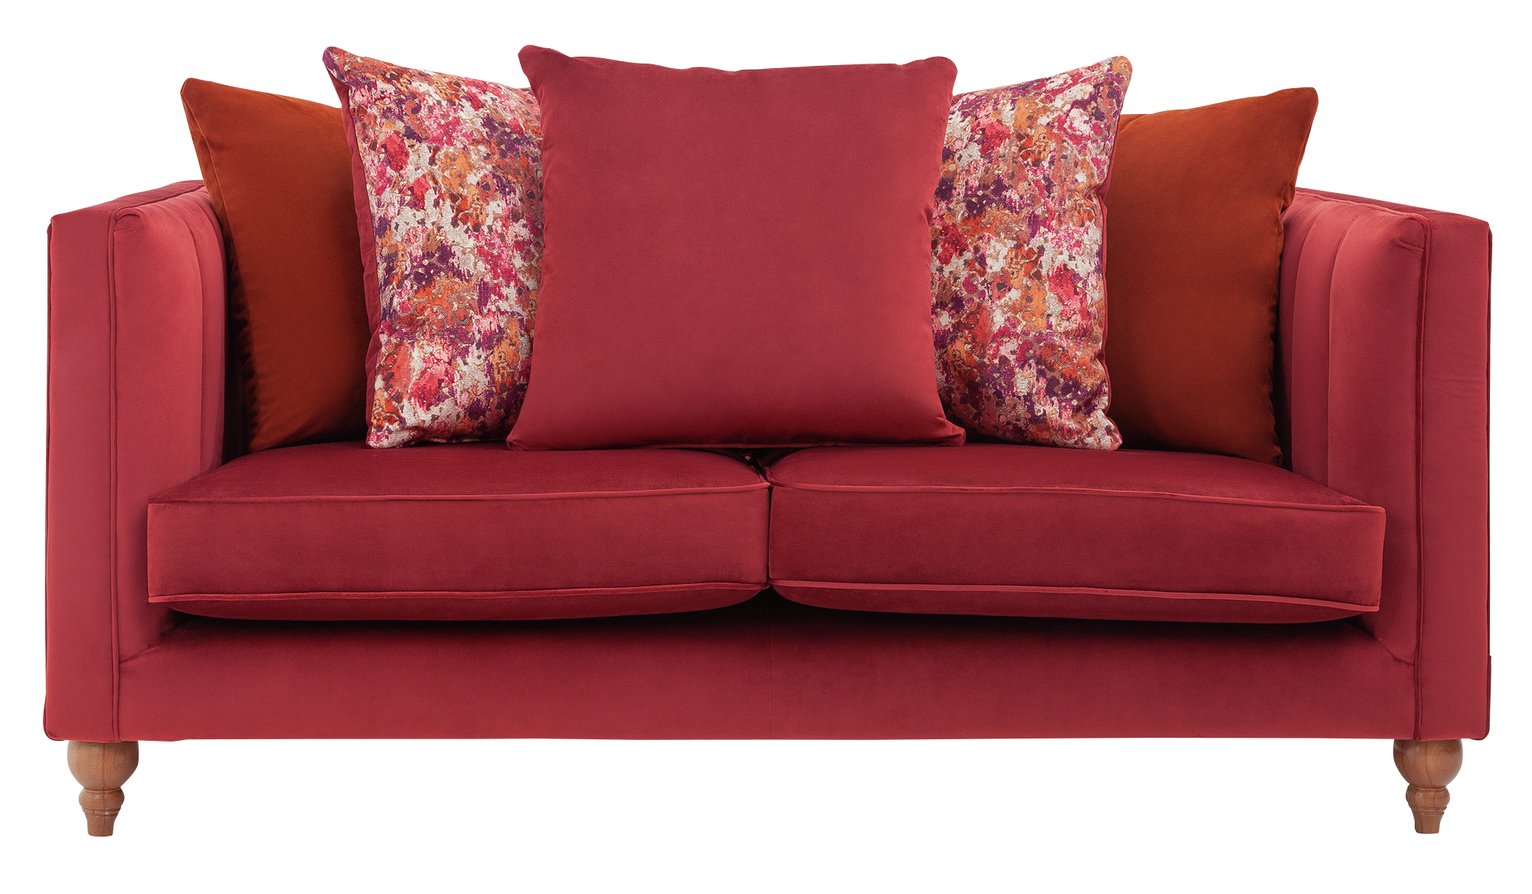 Argos Home Bardot 2 Seater Velvet Sofa - Cranberry